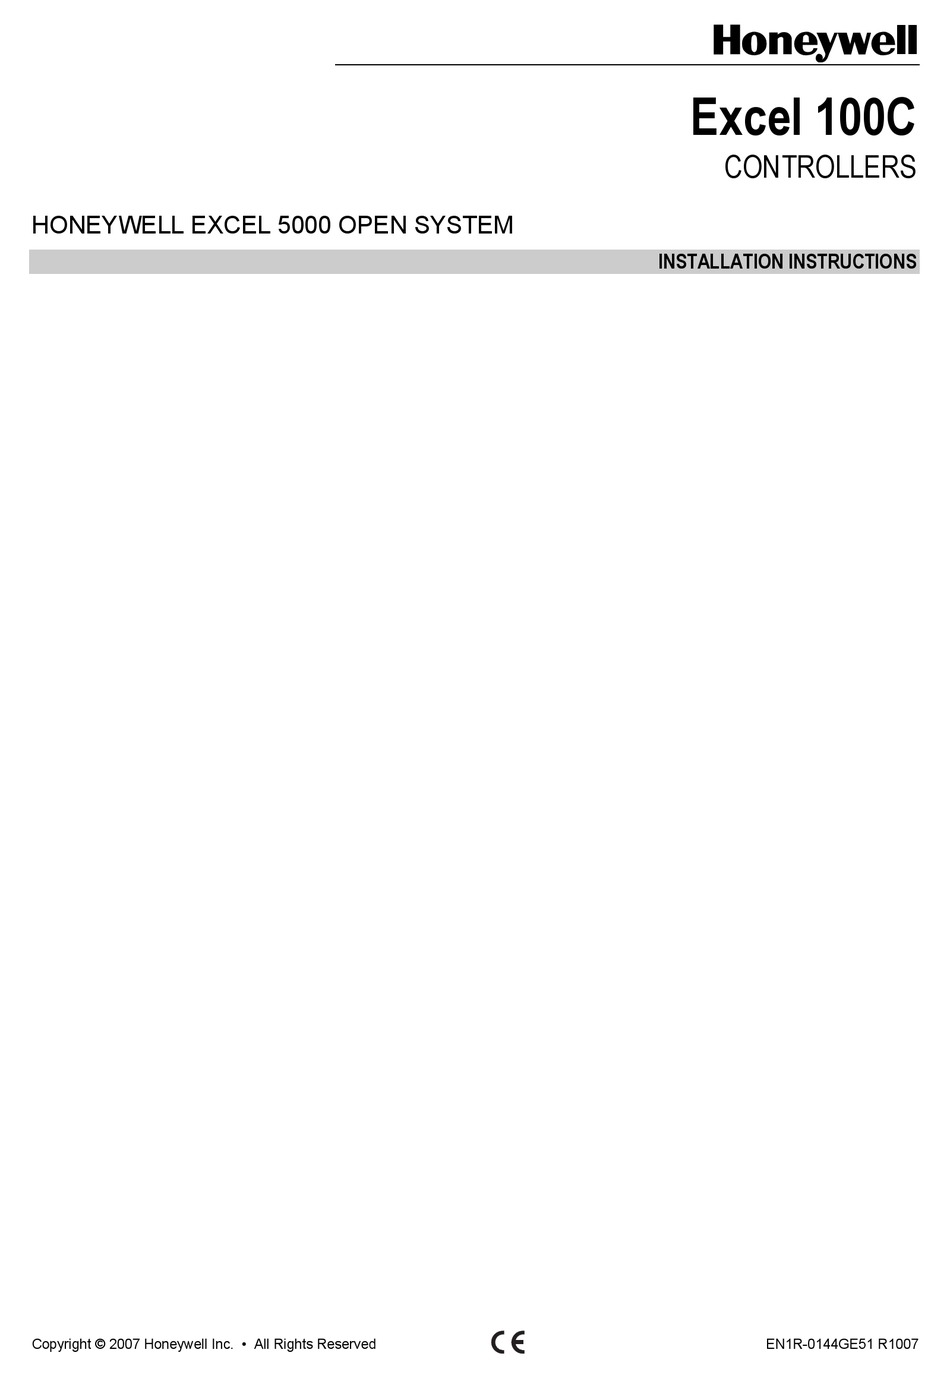 Honeywell XL1000C100 controlador Web de Excel ** ** Probado